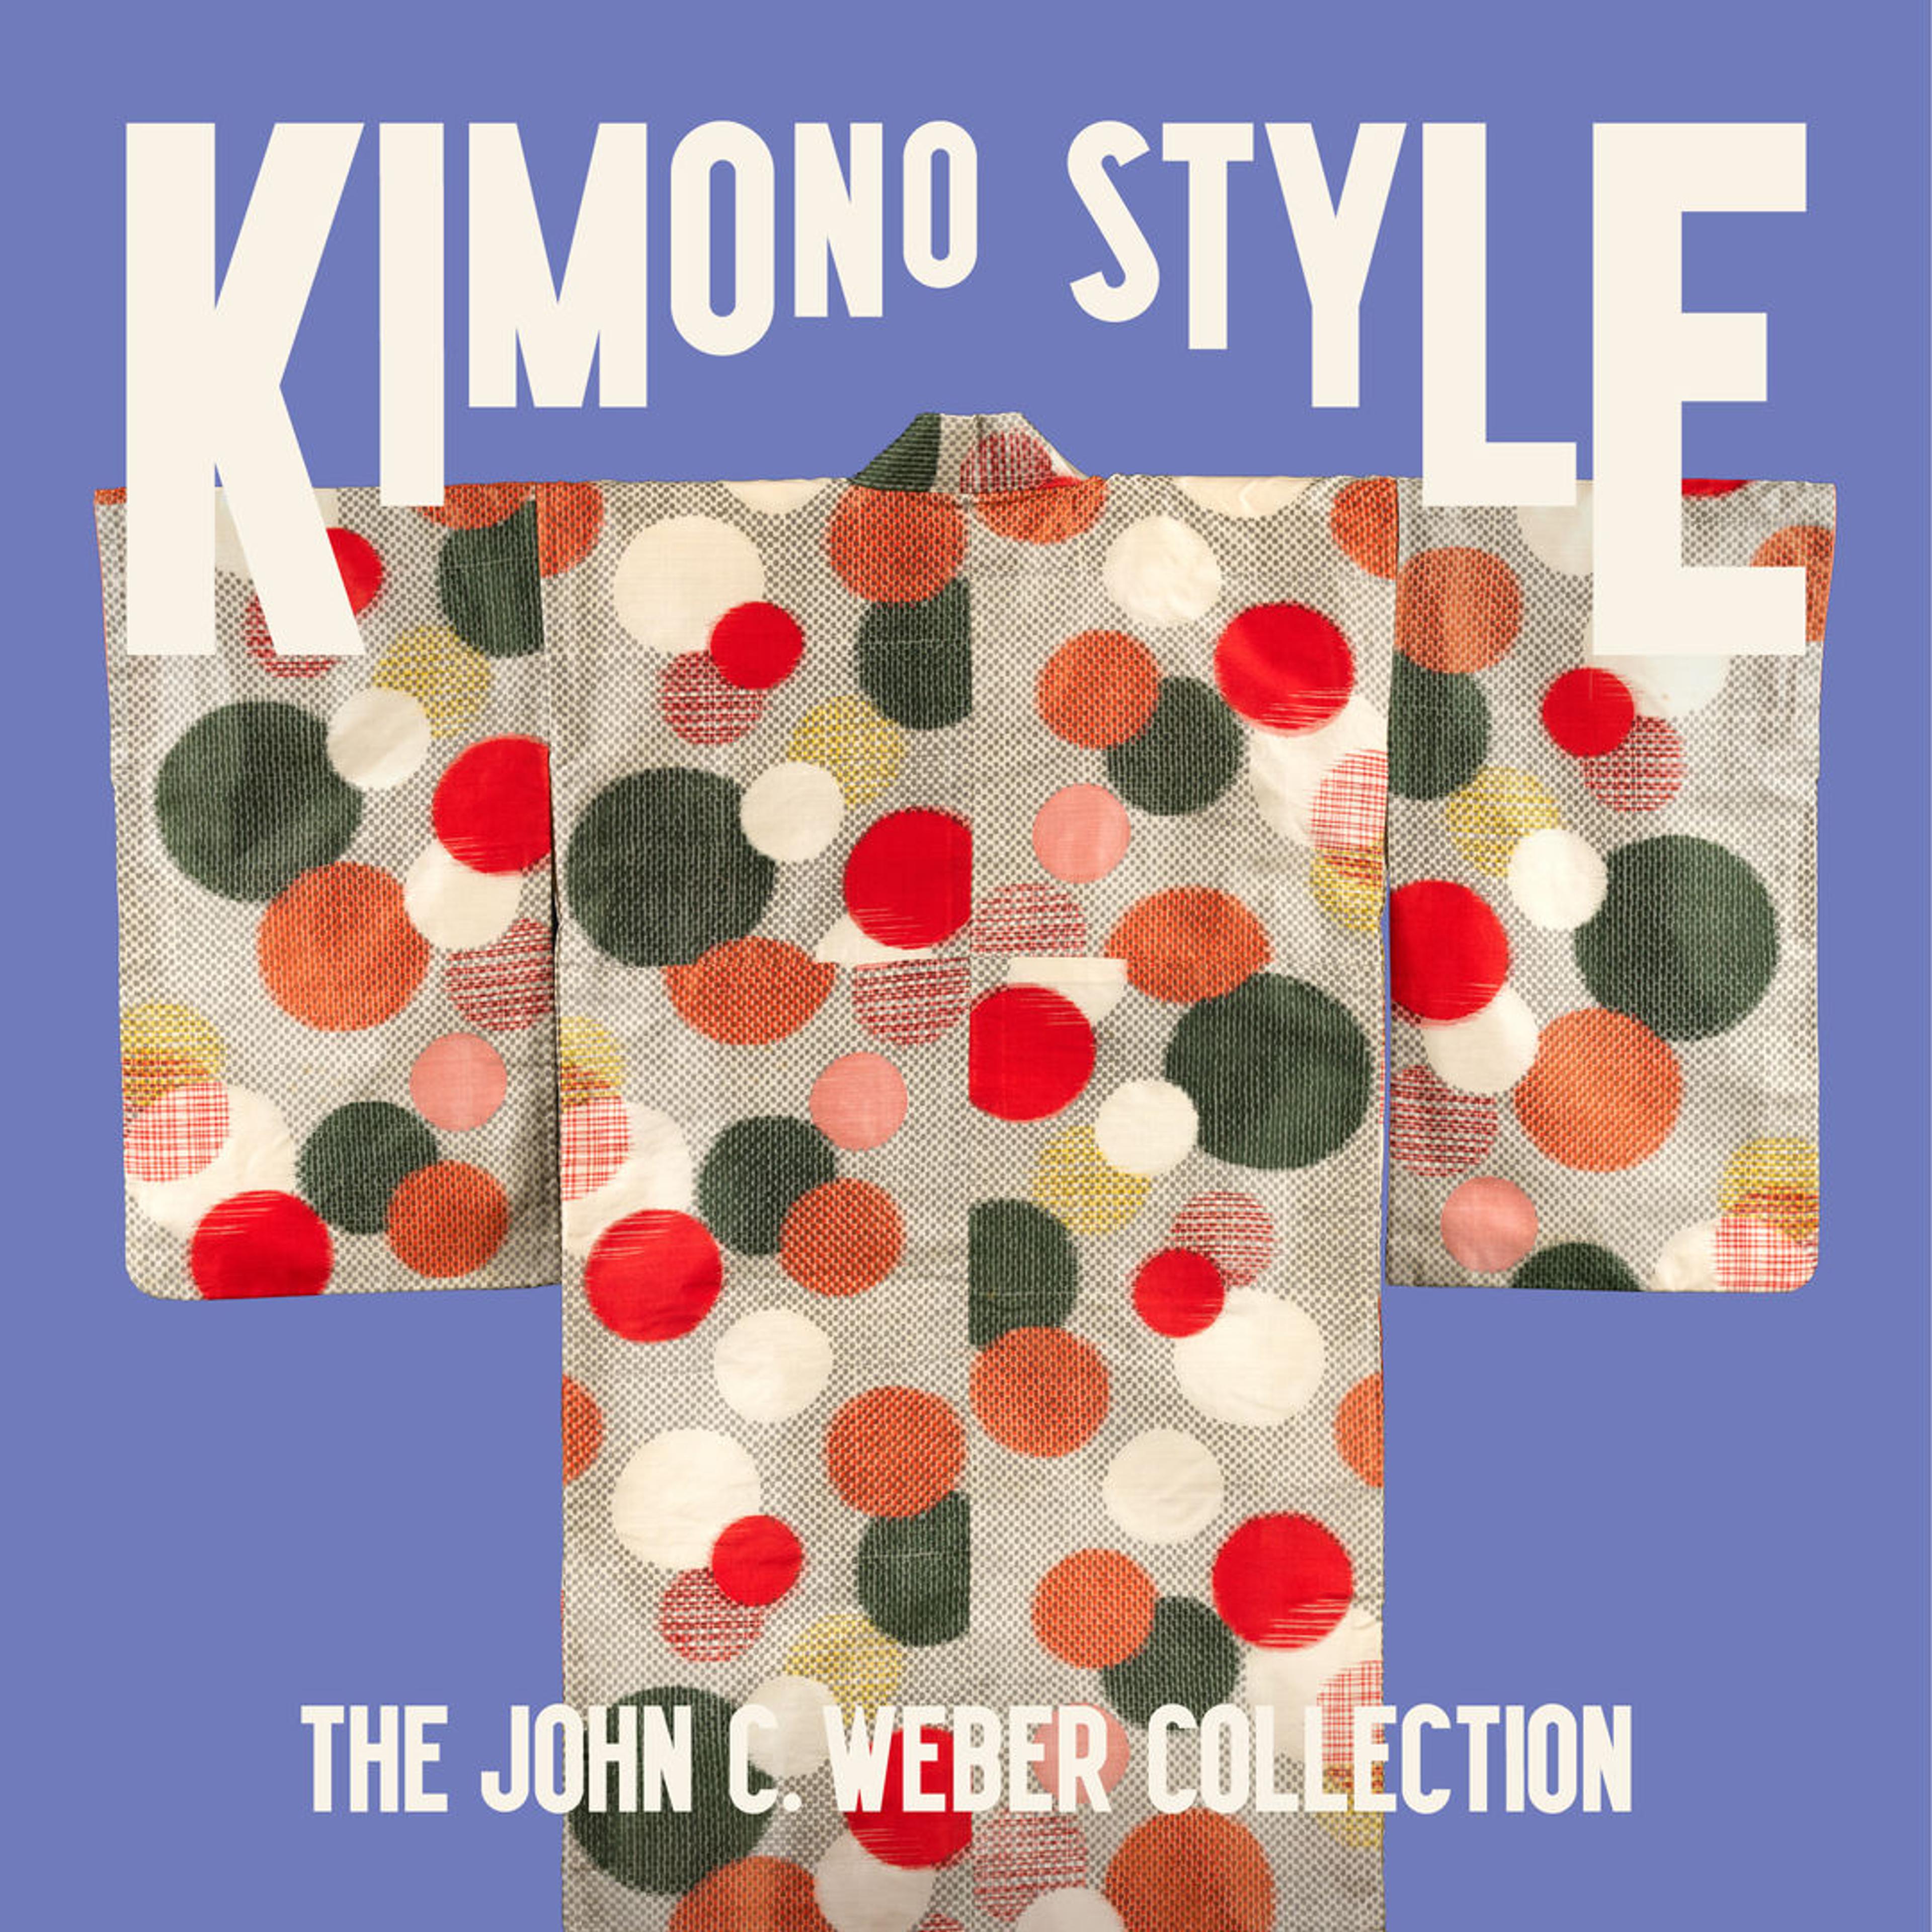 1930's Art Deco Silk Velvet Kimono Scarf Coat - Cobalt Lace